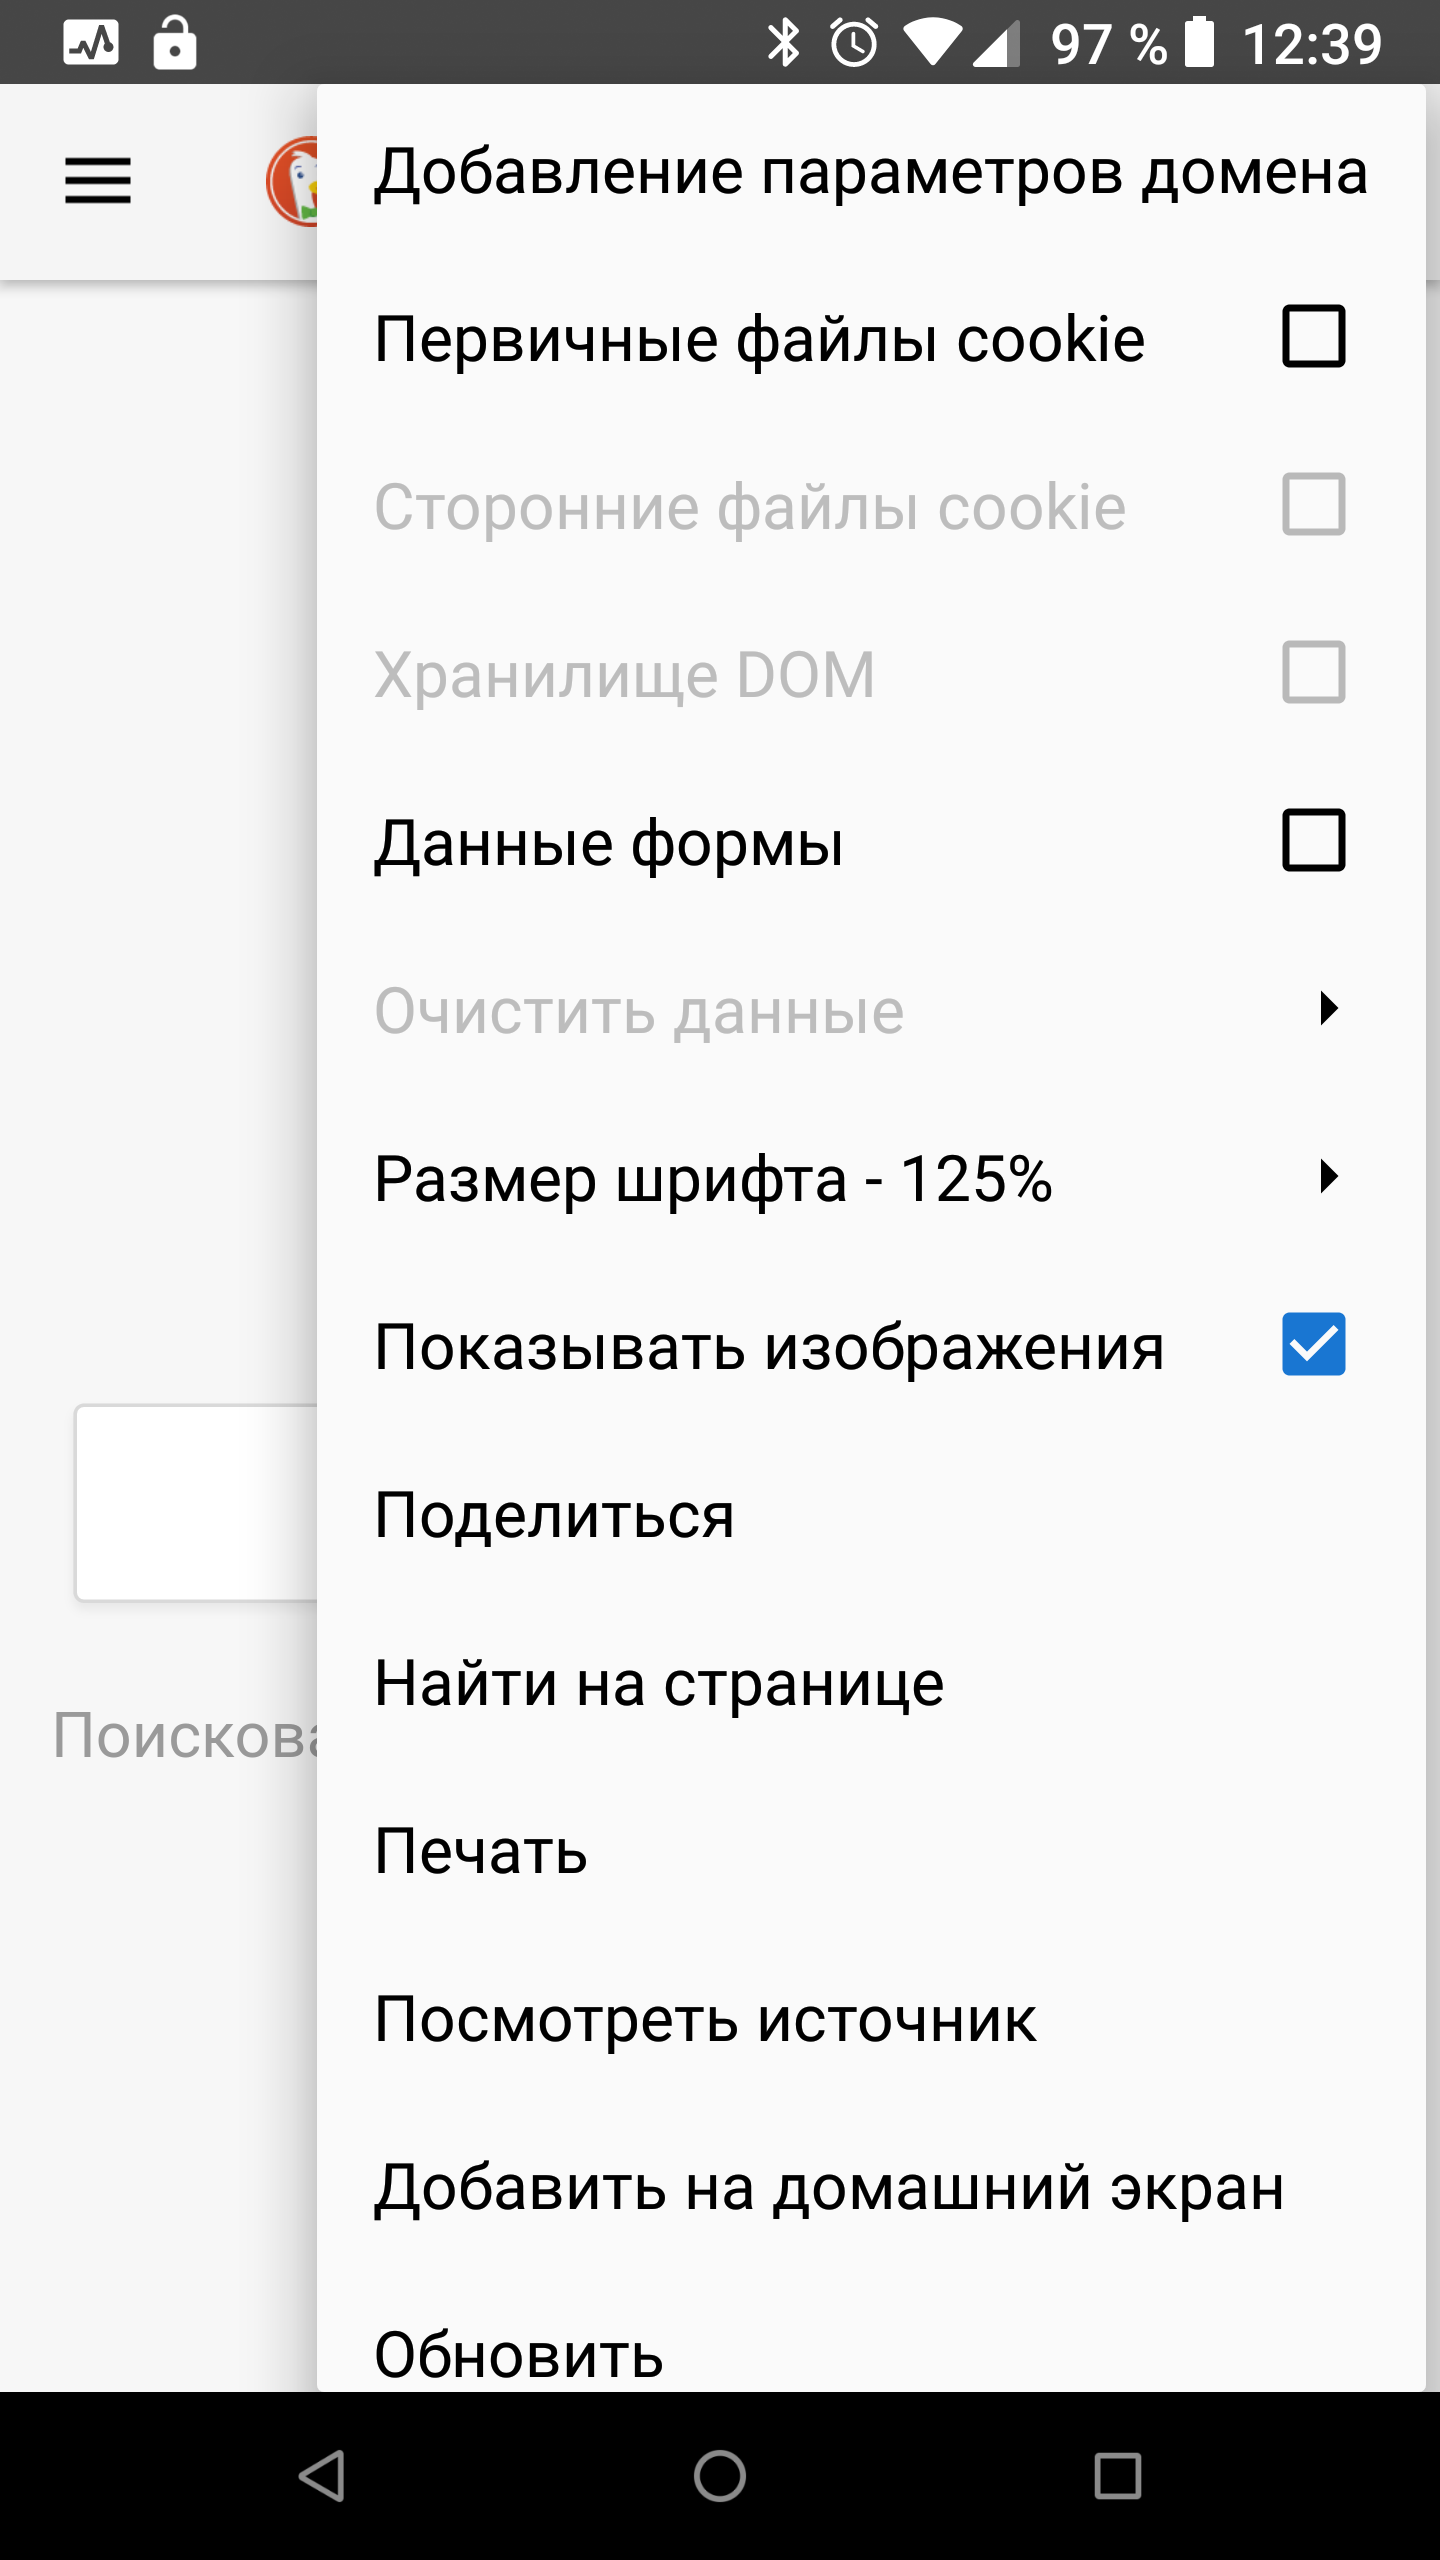 fastlane/metadata/android/ru/images/phoneScreenshots/04-OptionsMenu.png